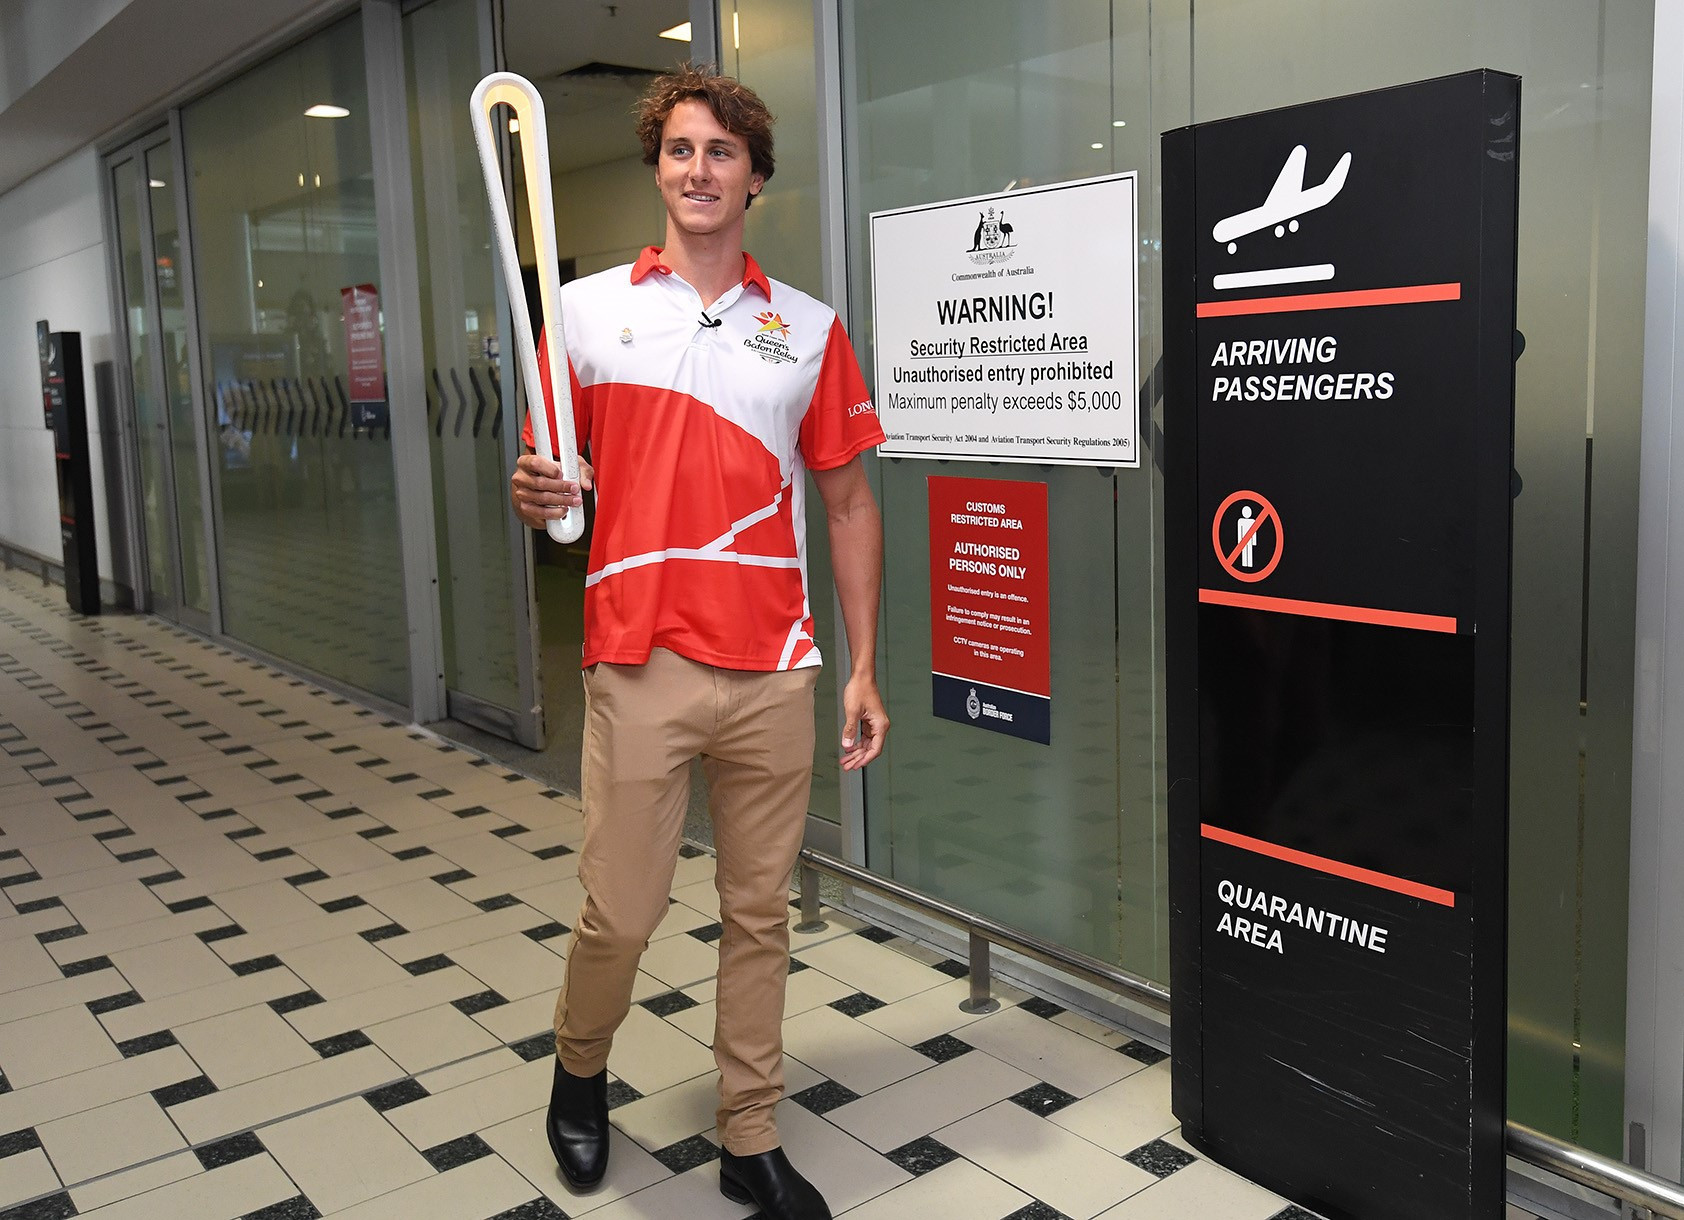 Gold Coast 2018 ambassador Cameron McEvoy carried the Queen's Baton through arrivals at Brisbane International Airport ©Gold Coast 2018